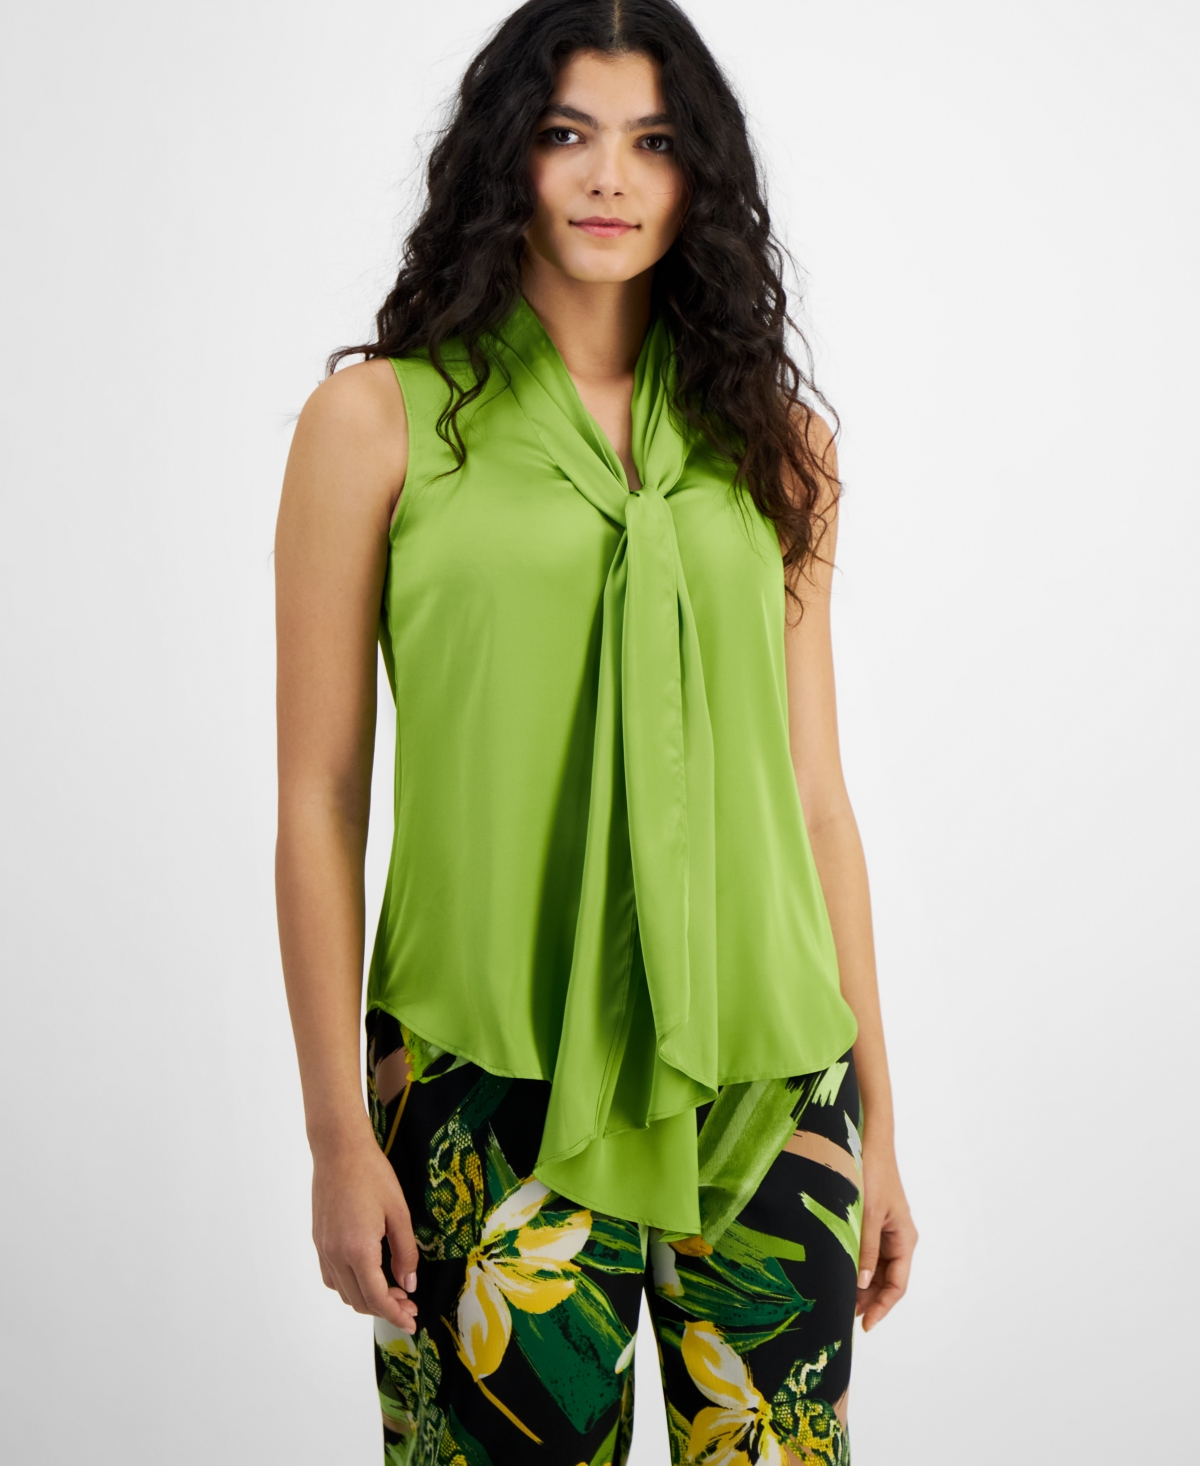 Women's Tie-Neck Sleeveless Satin Blouse, Created for Macy's - Green Apple